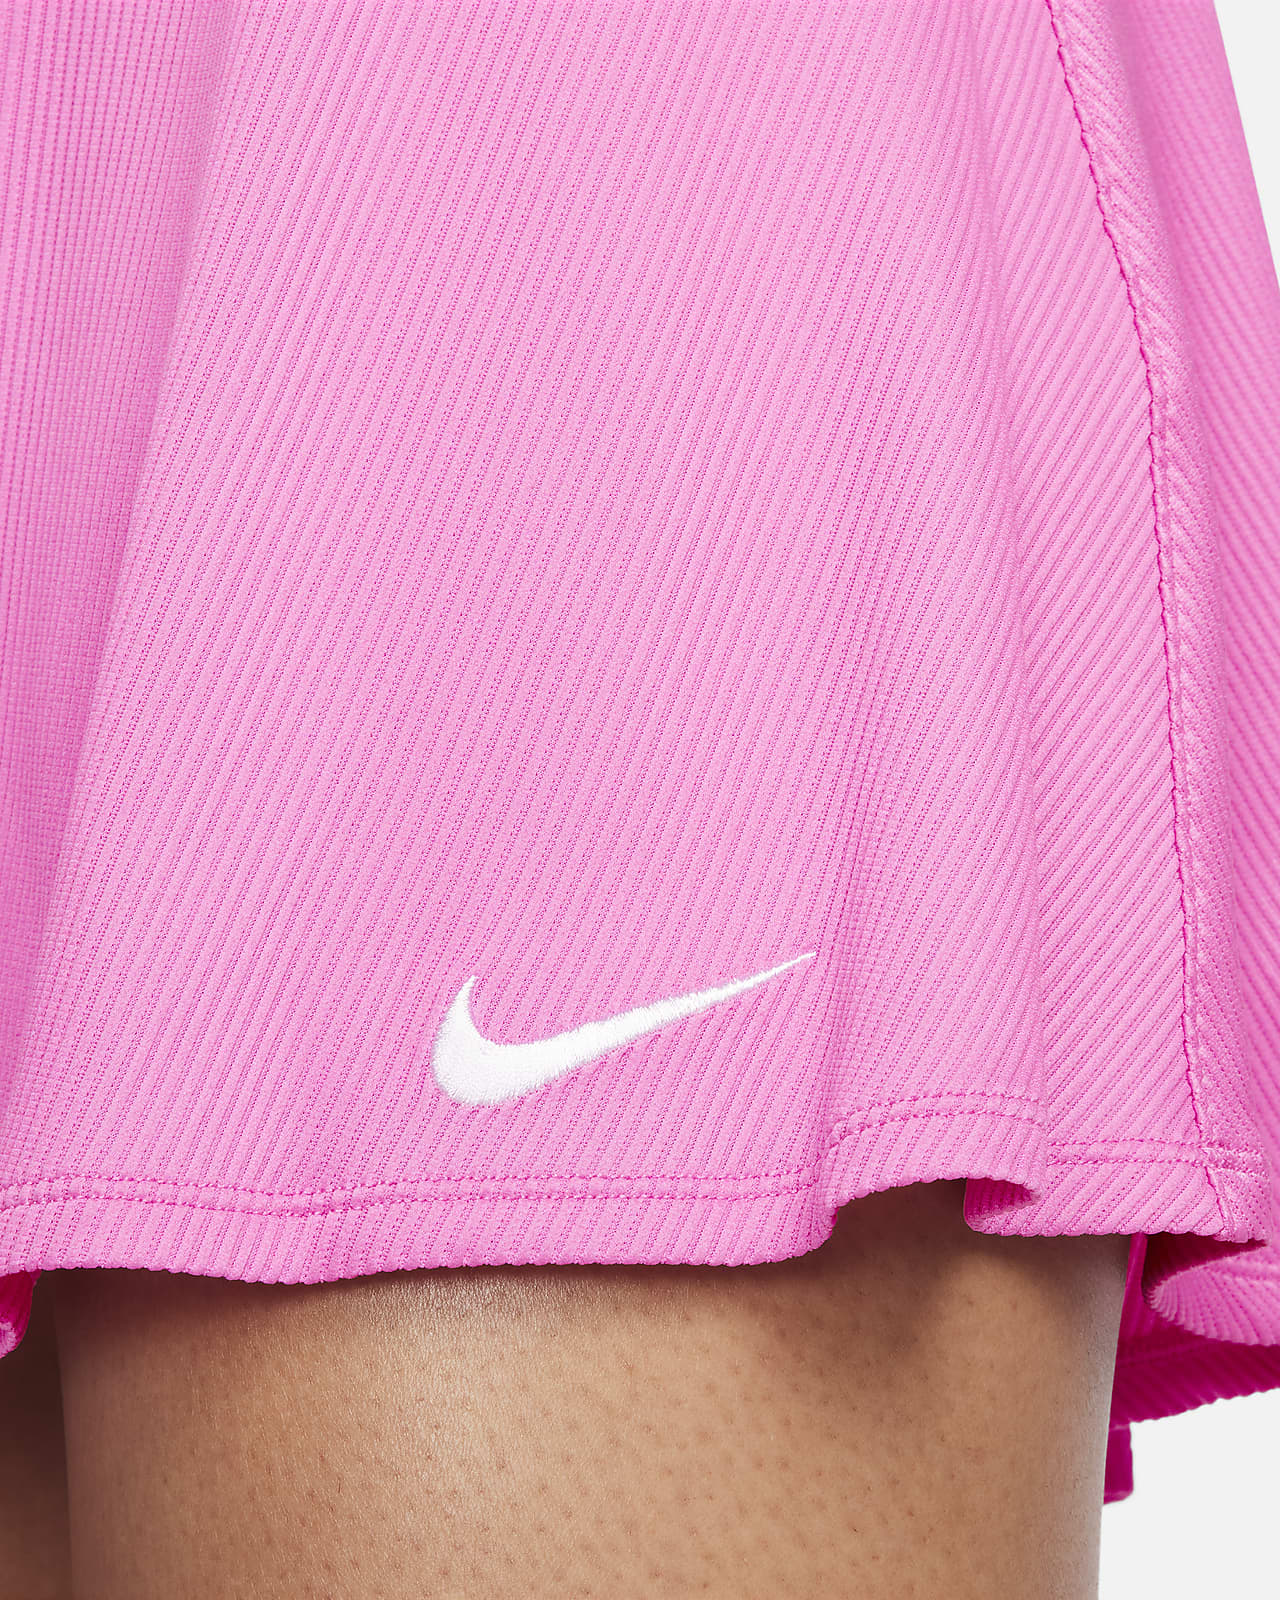 Nike Dri-FIT Advantage Women's Tennis Skirt. Nike PT